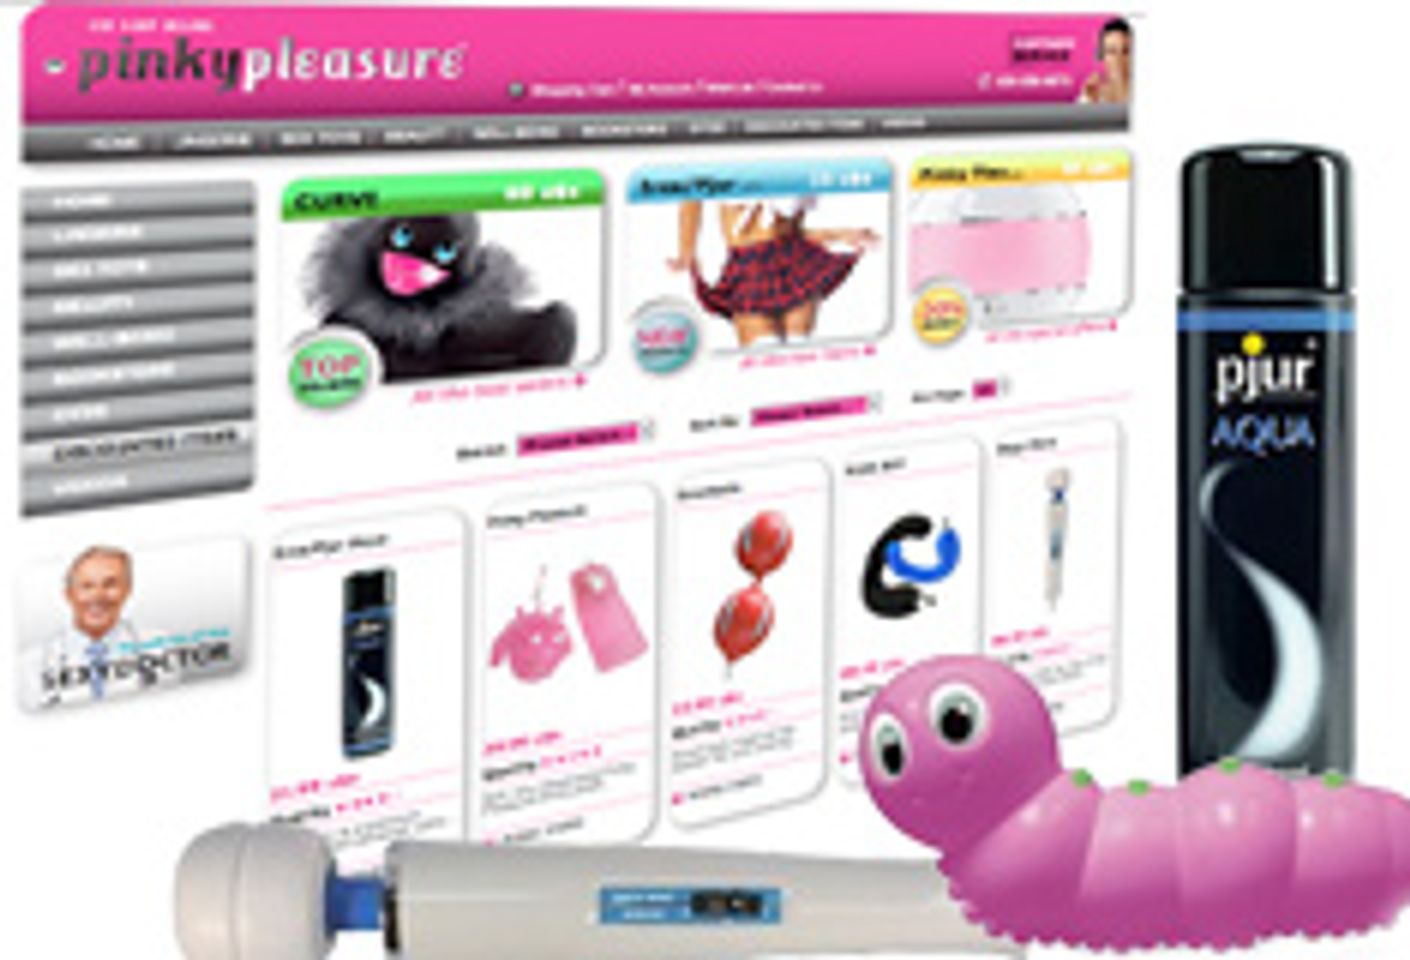 Soft-core Site PinkyPleasure.com Debuts